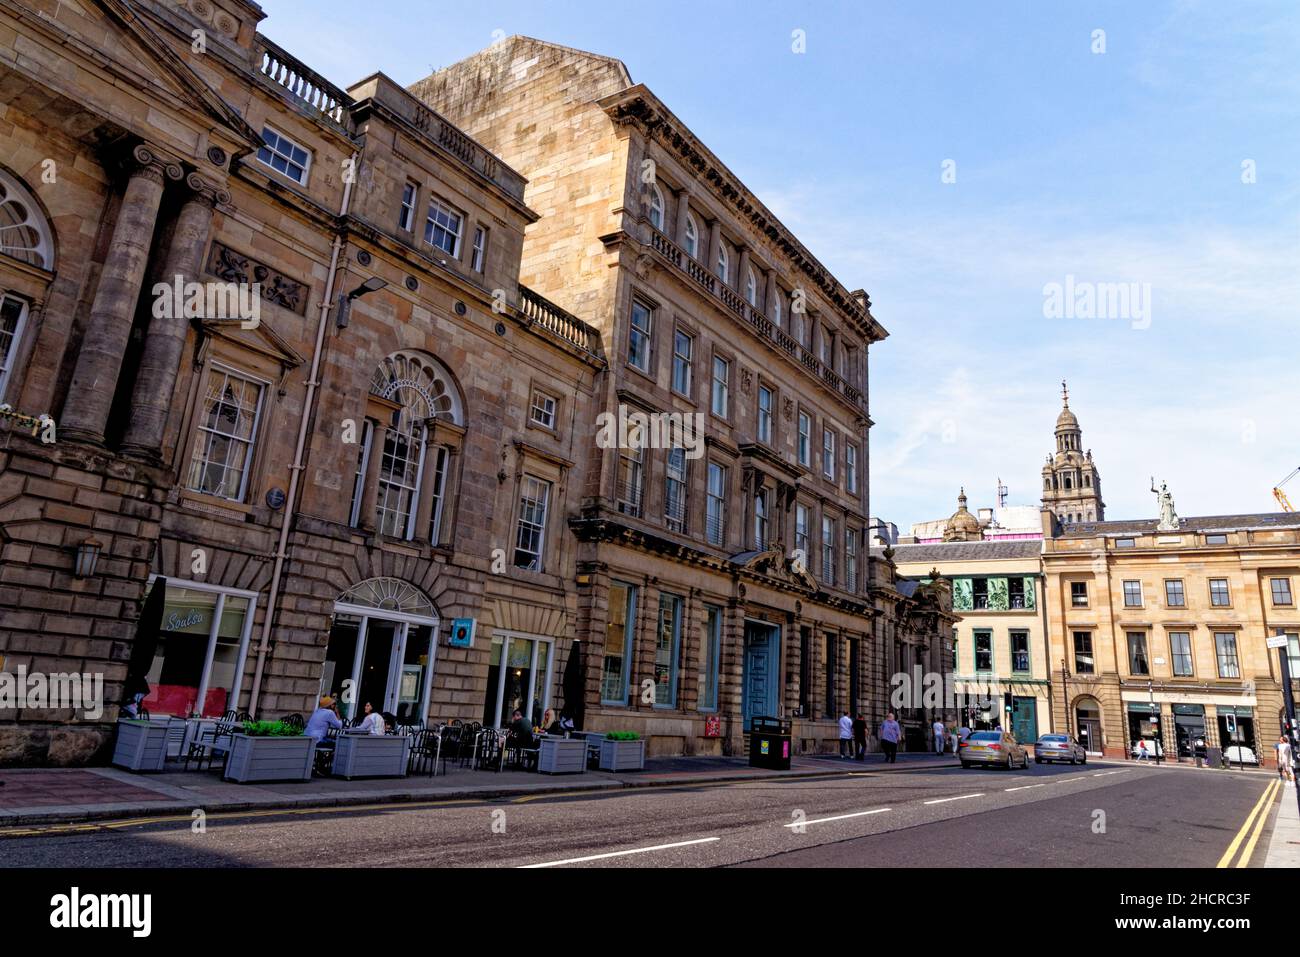 View of the Merchant City - Glasgow, Scotland, United Kingdom - 23rd of July 2021 Stock Photo